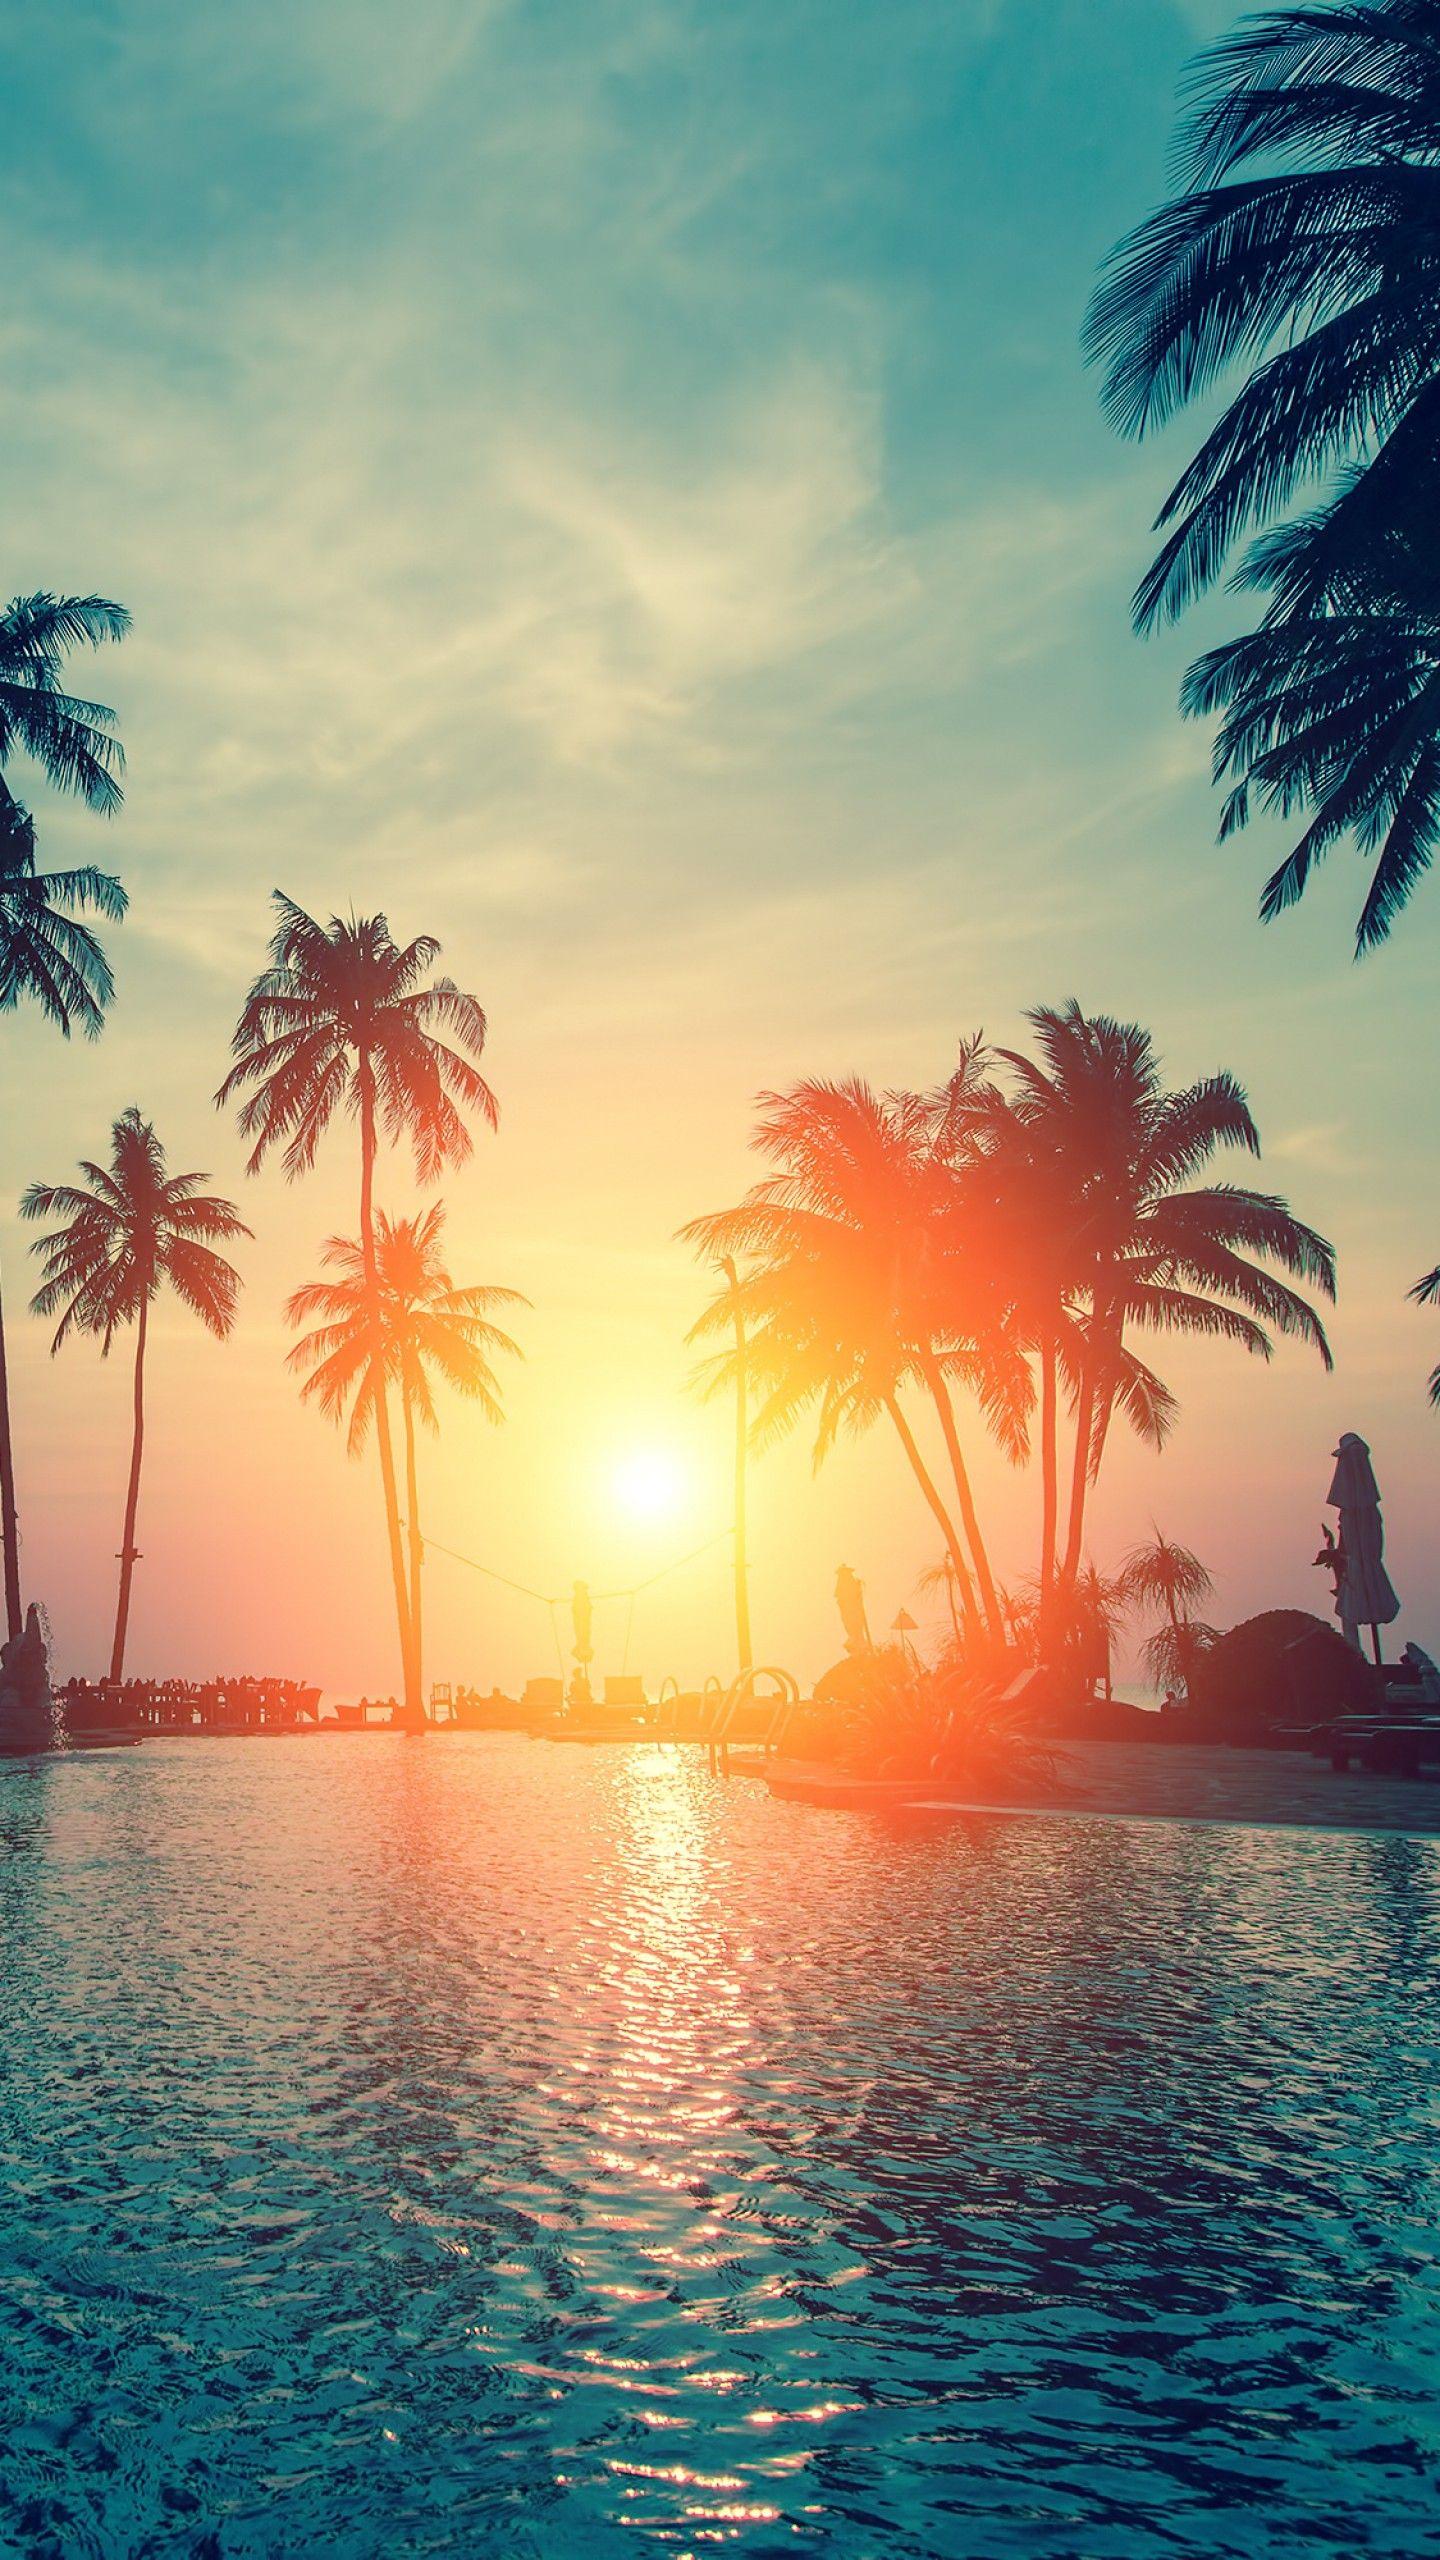 Tropical Beach Sunset Wallpapers - Top Free Tropical Beach Sunset ...